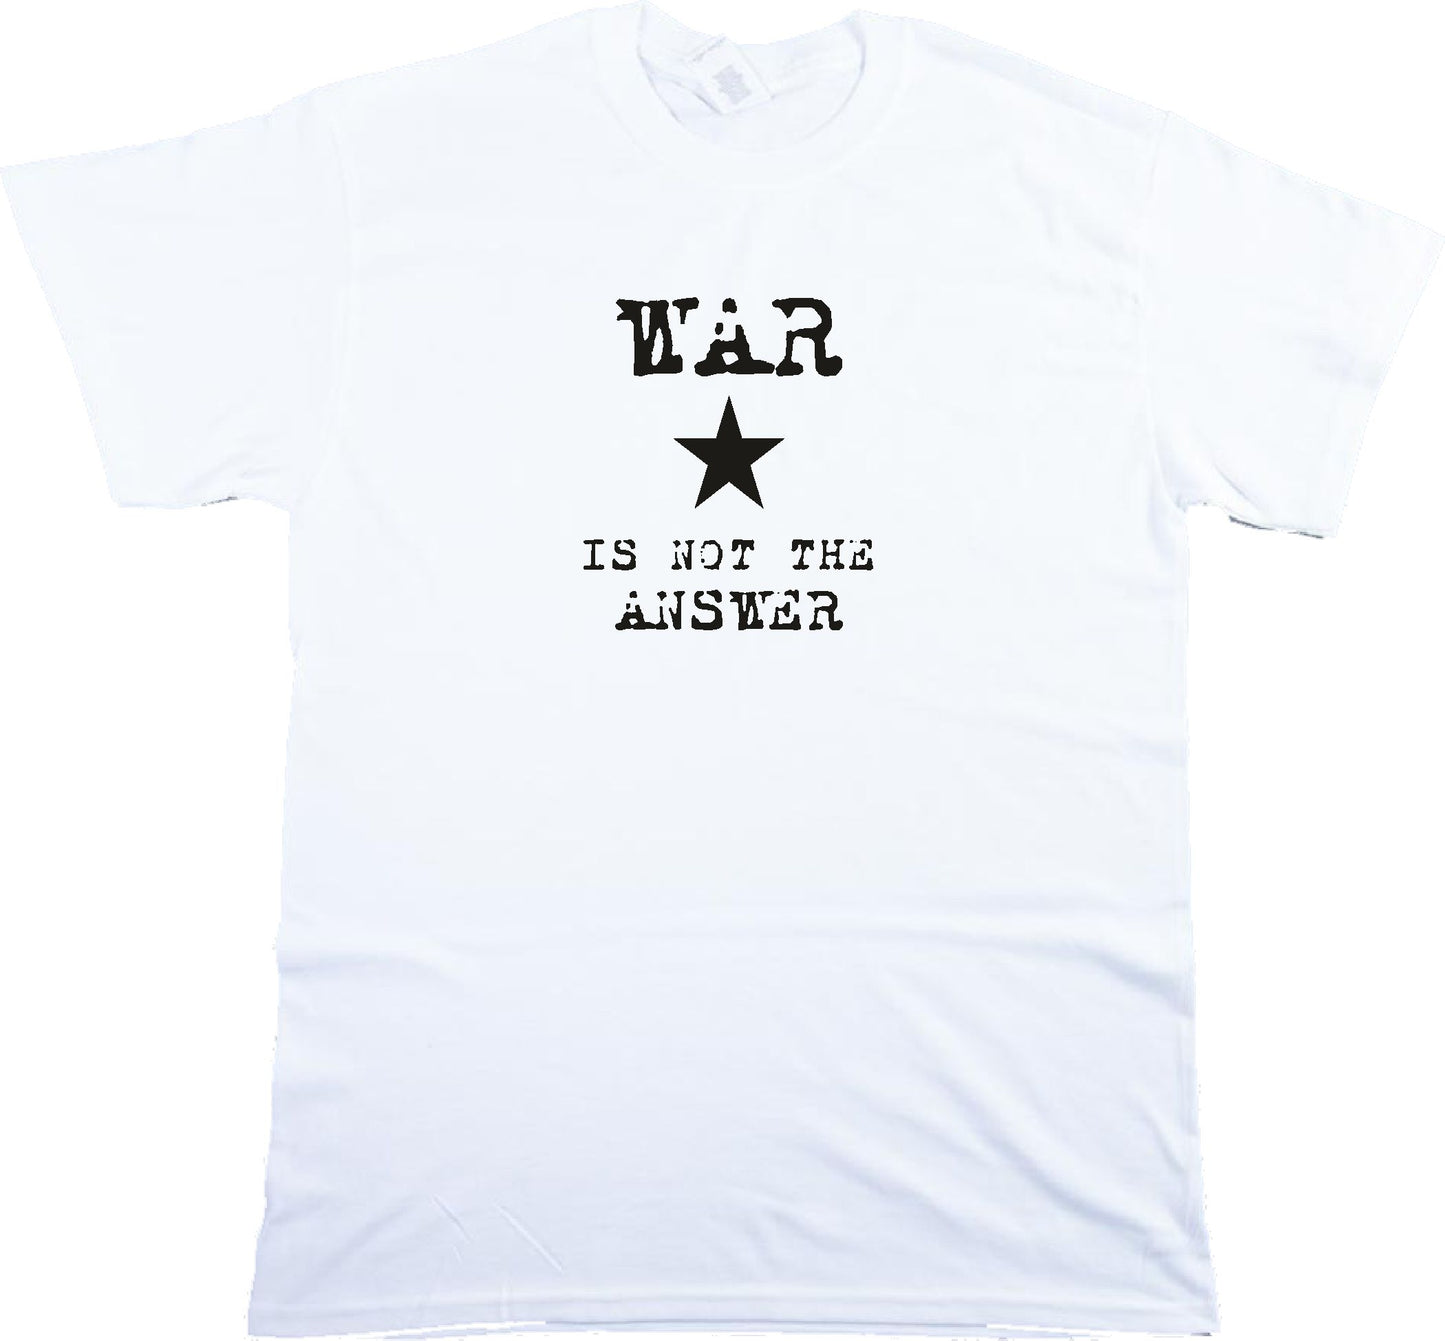 Retro Anti War Protest T-shirt - Various Colours